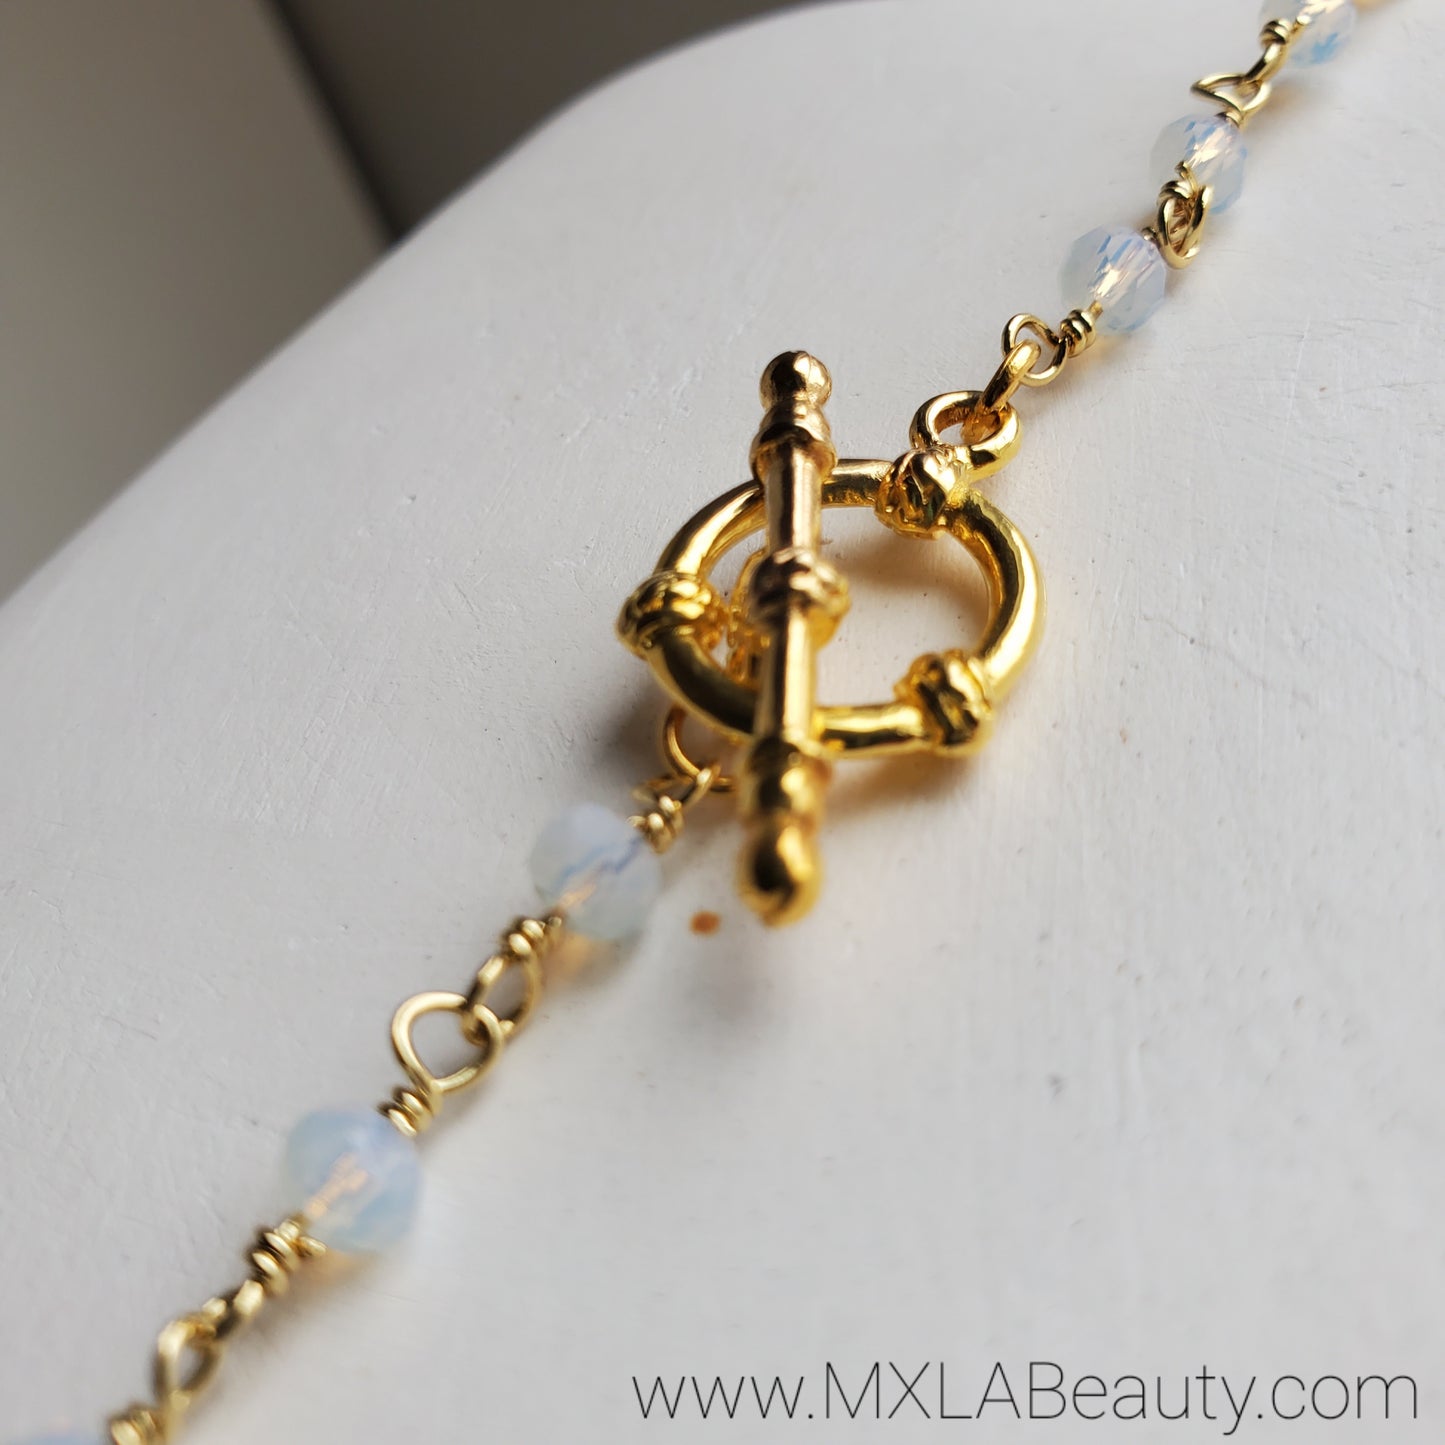 Goldstone + Jade Pendant Necklace